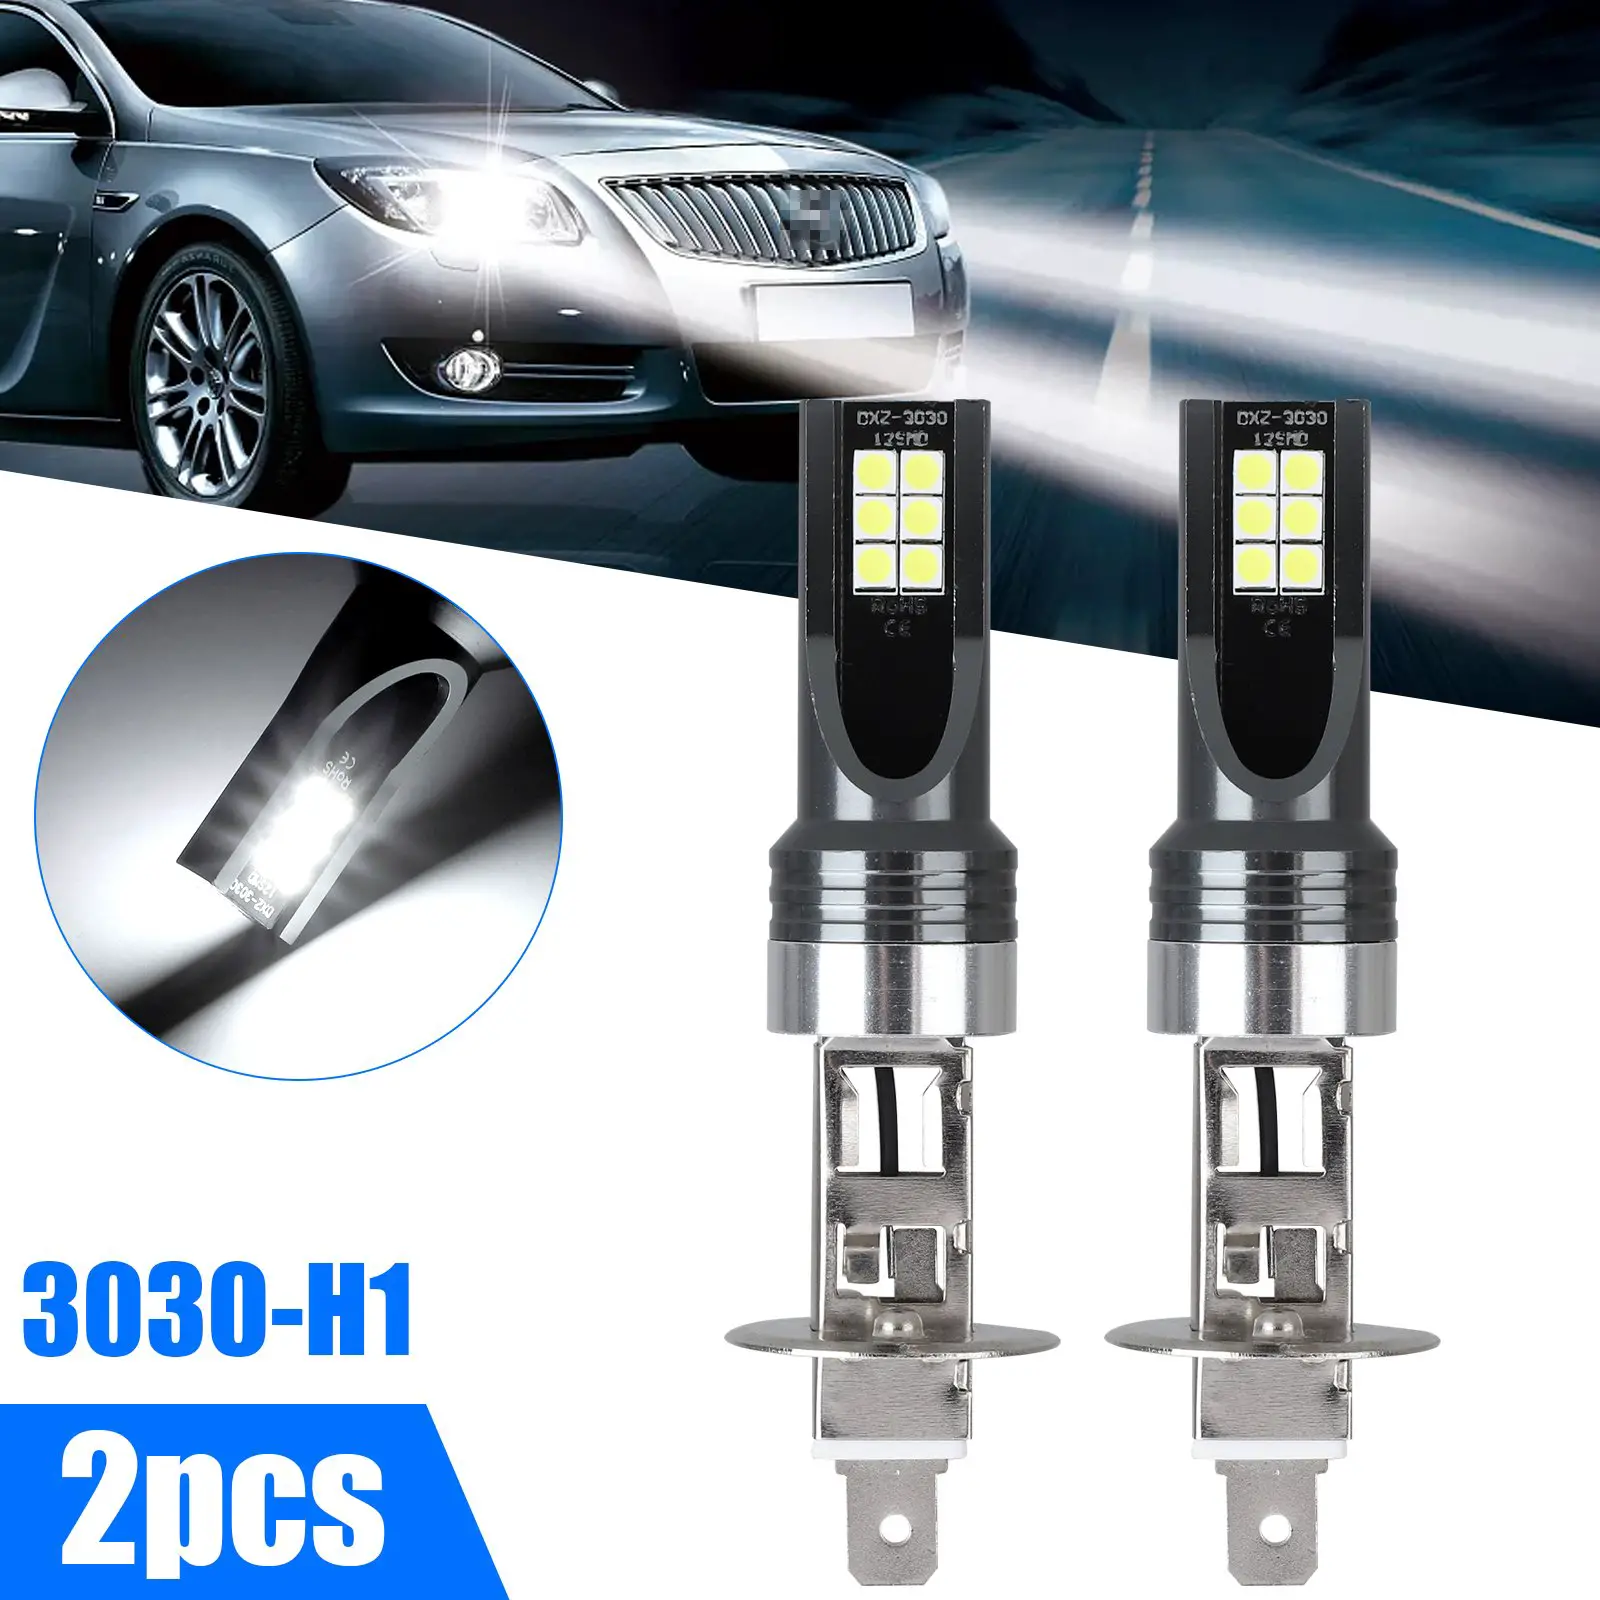 H1 LED Headlight Bulbs, EEEkit Car H1 Light Bulbs w/ High Low Beam ...